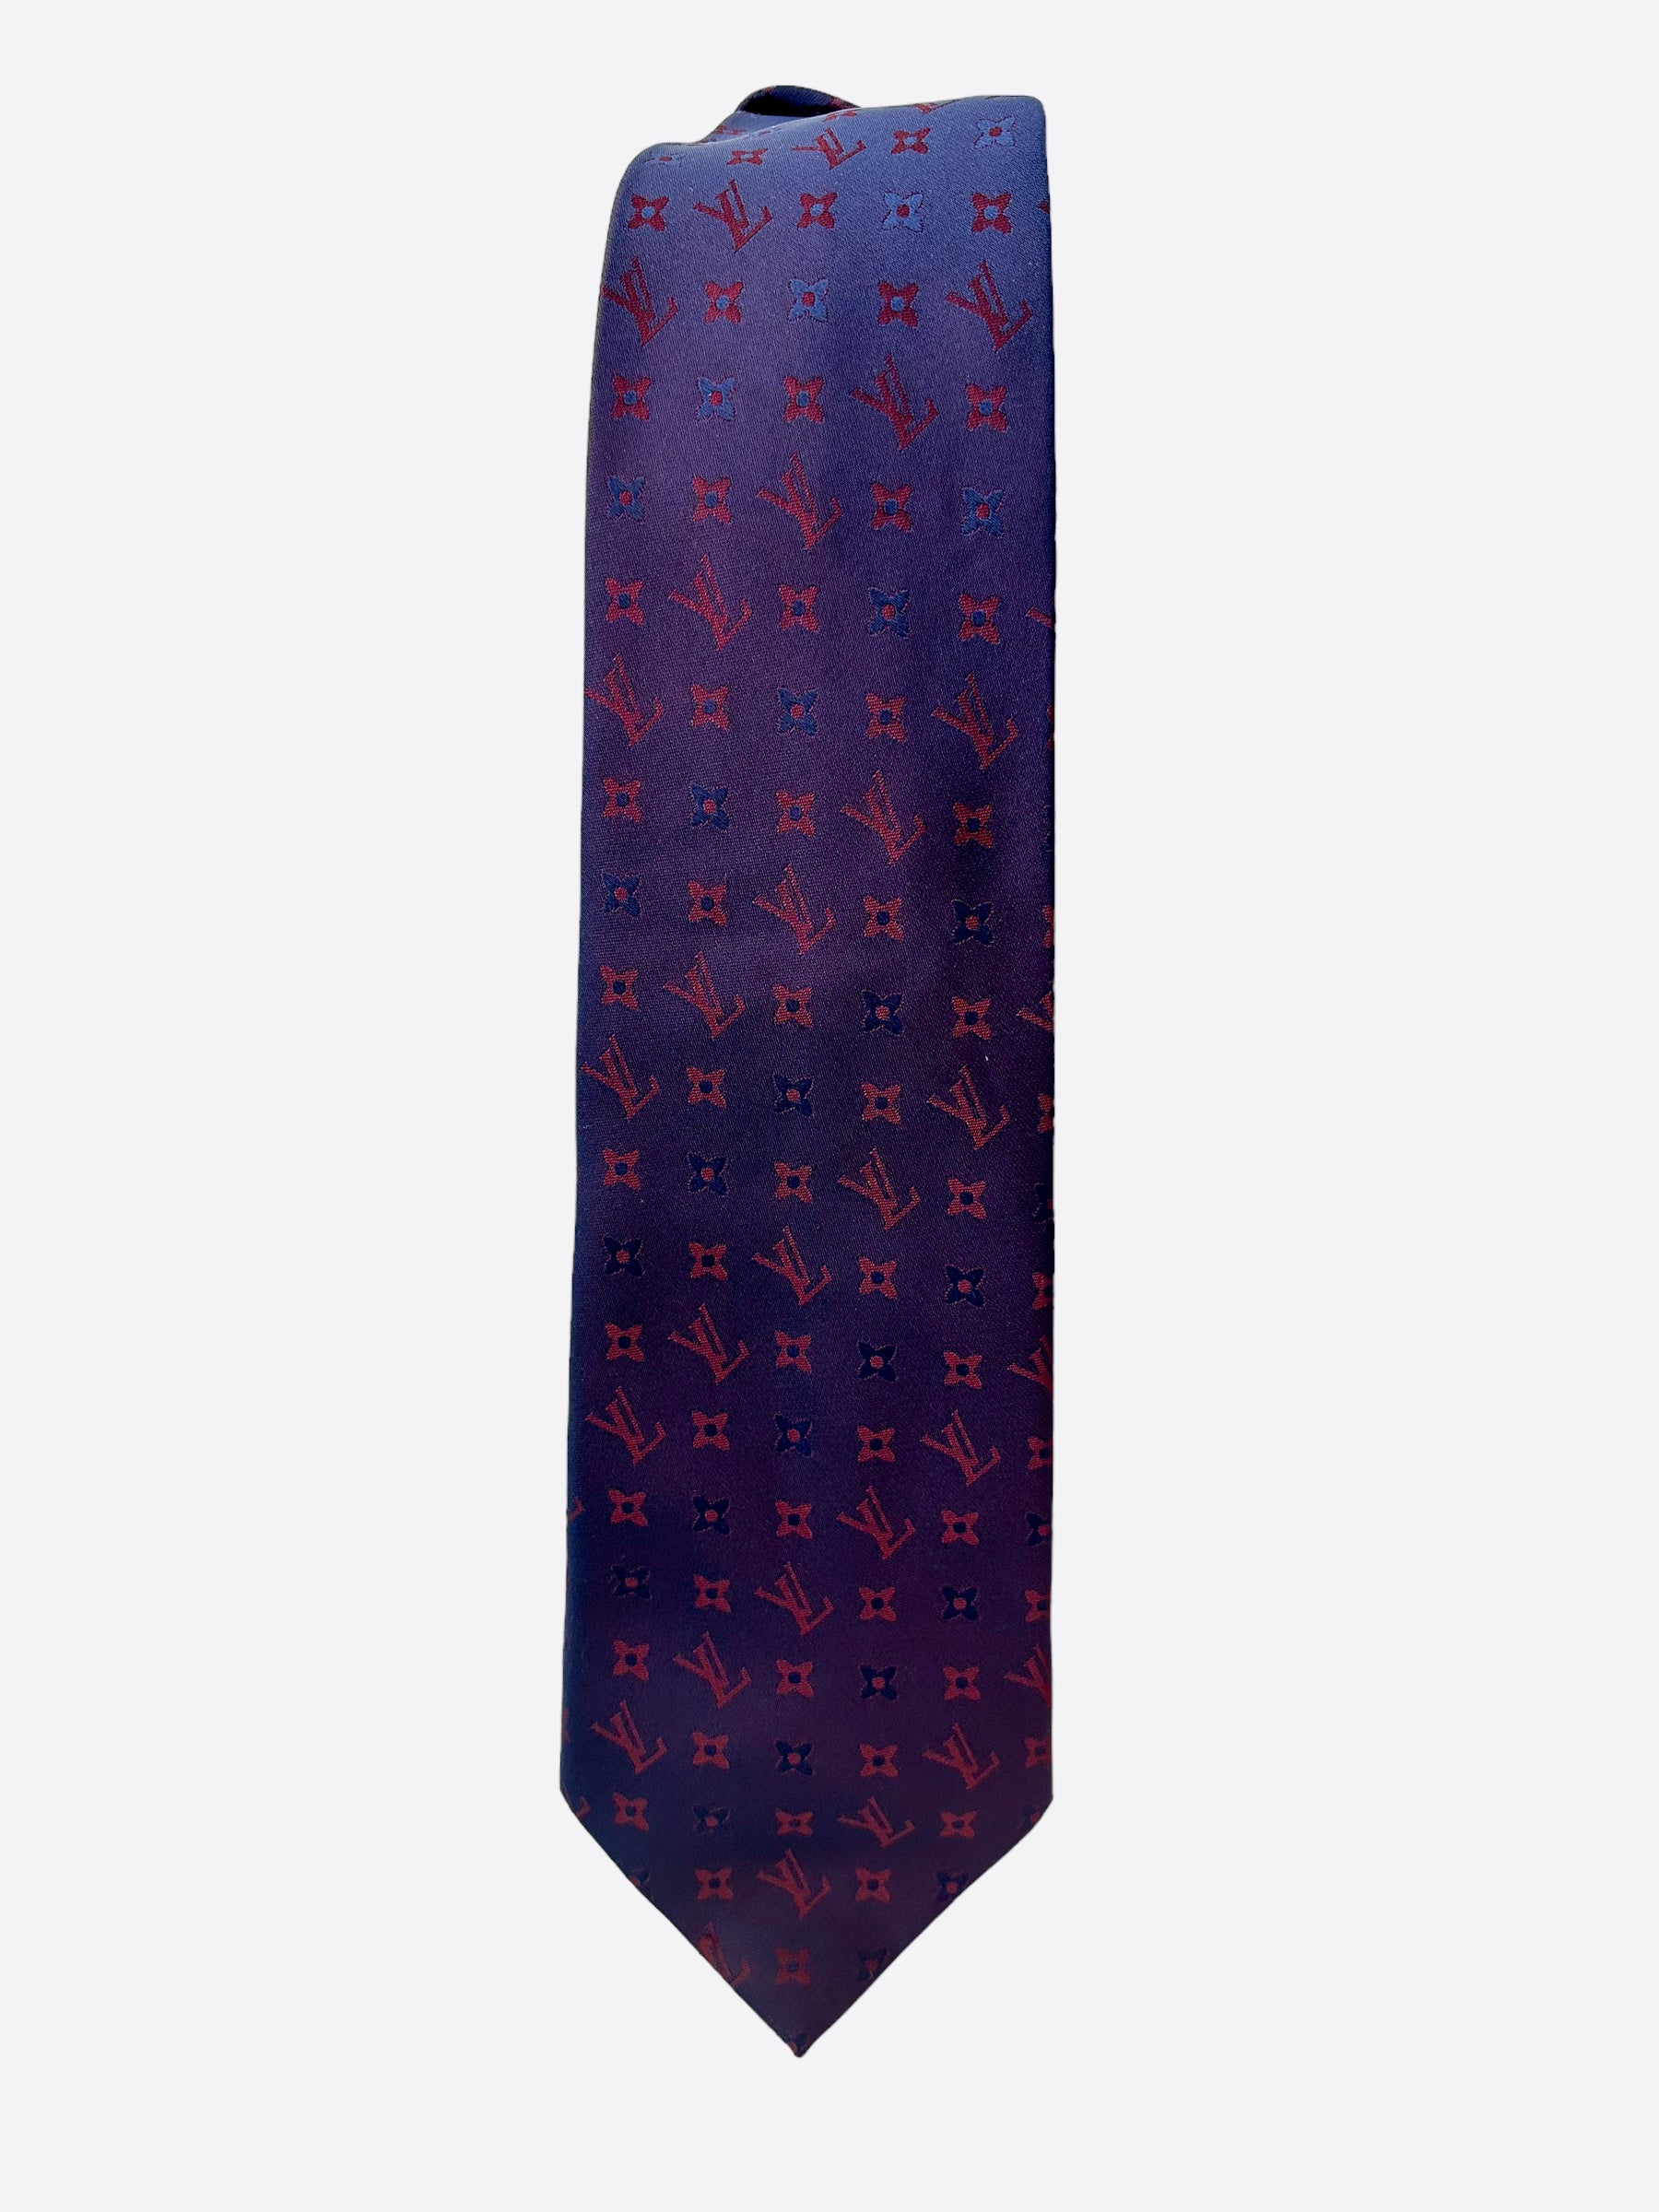 Lv Louis Vuitton Monogram Tie Navy Tie